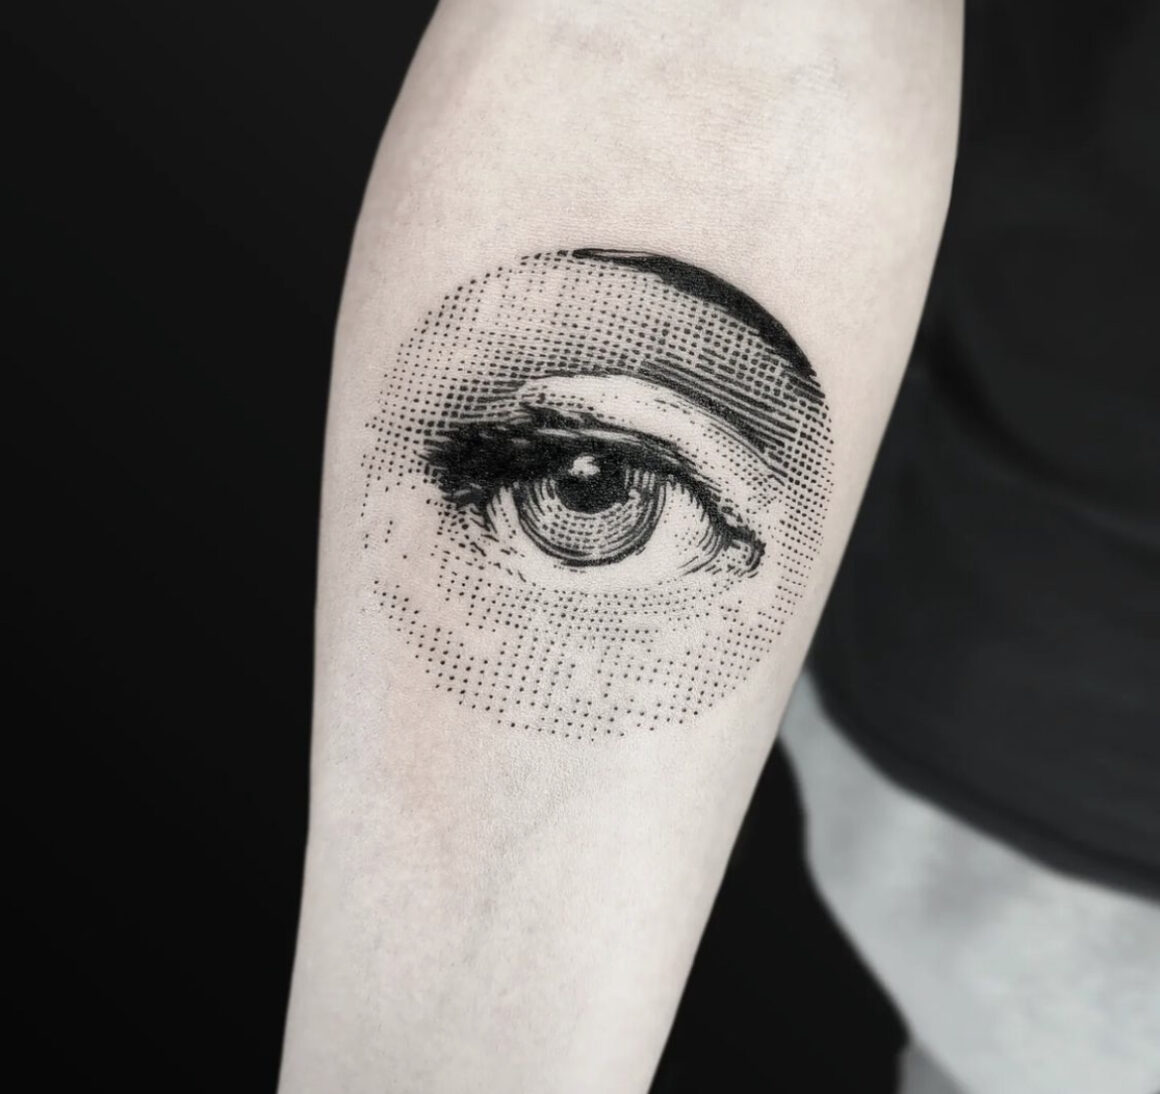 Tatuaje por Santhelia, @ santhelia